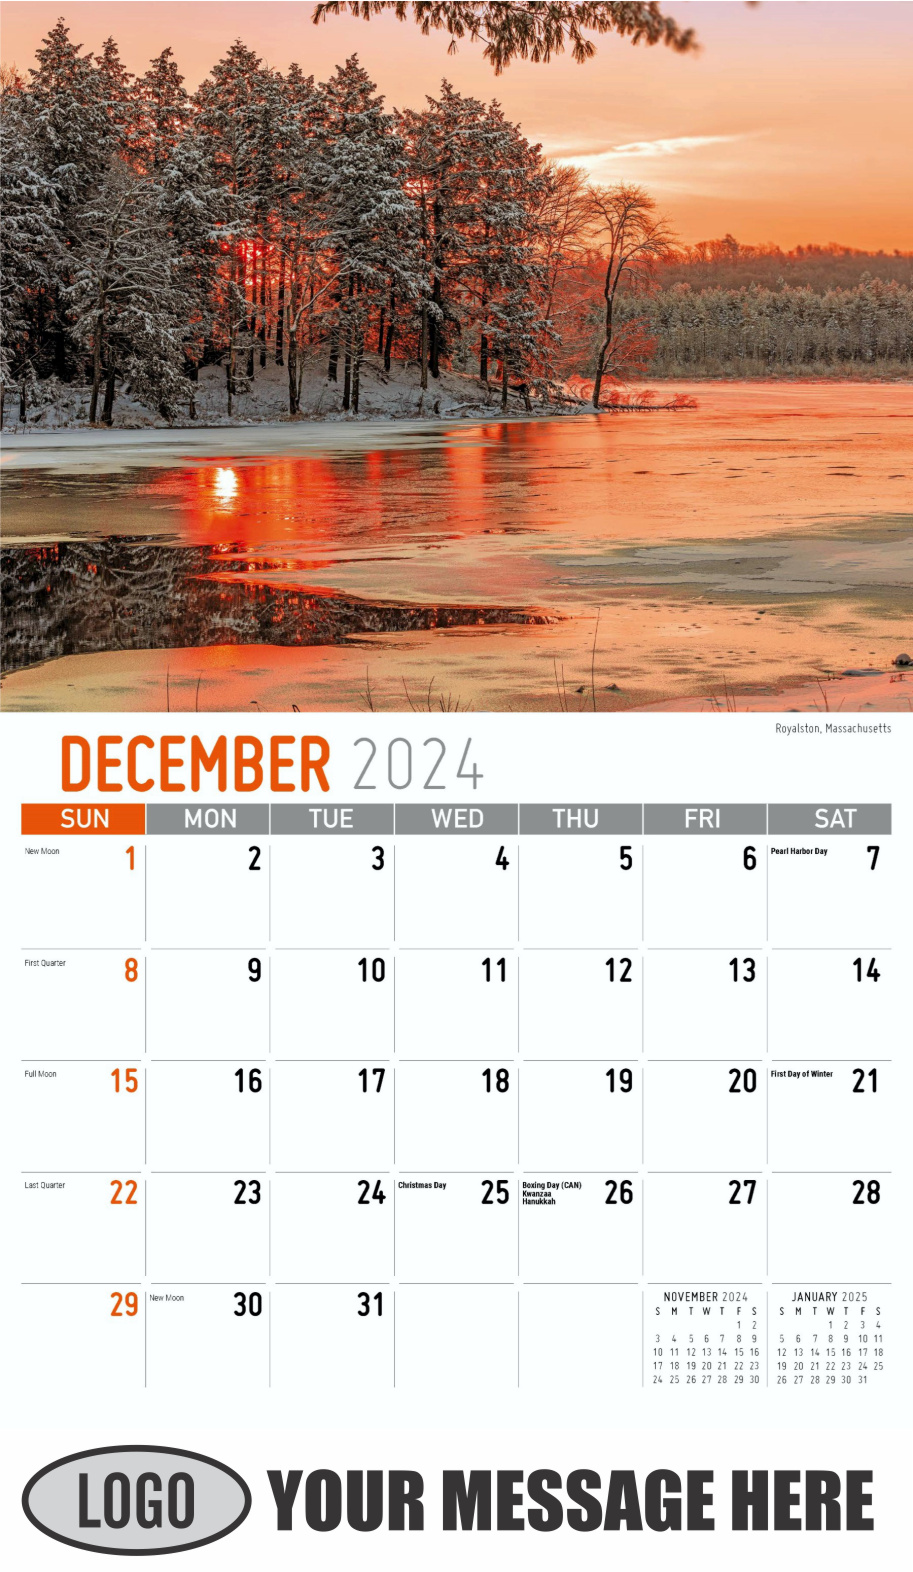 Scenes of New England 2024 Business Advertising Wall Calendar - December